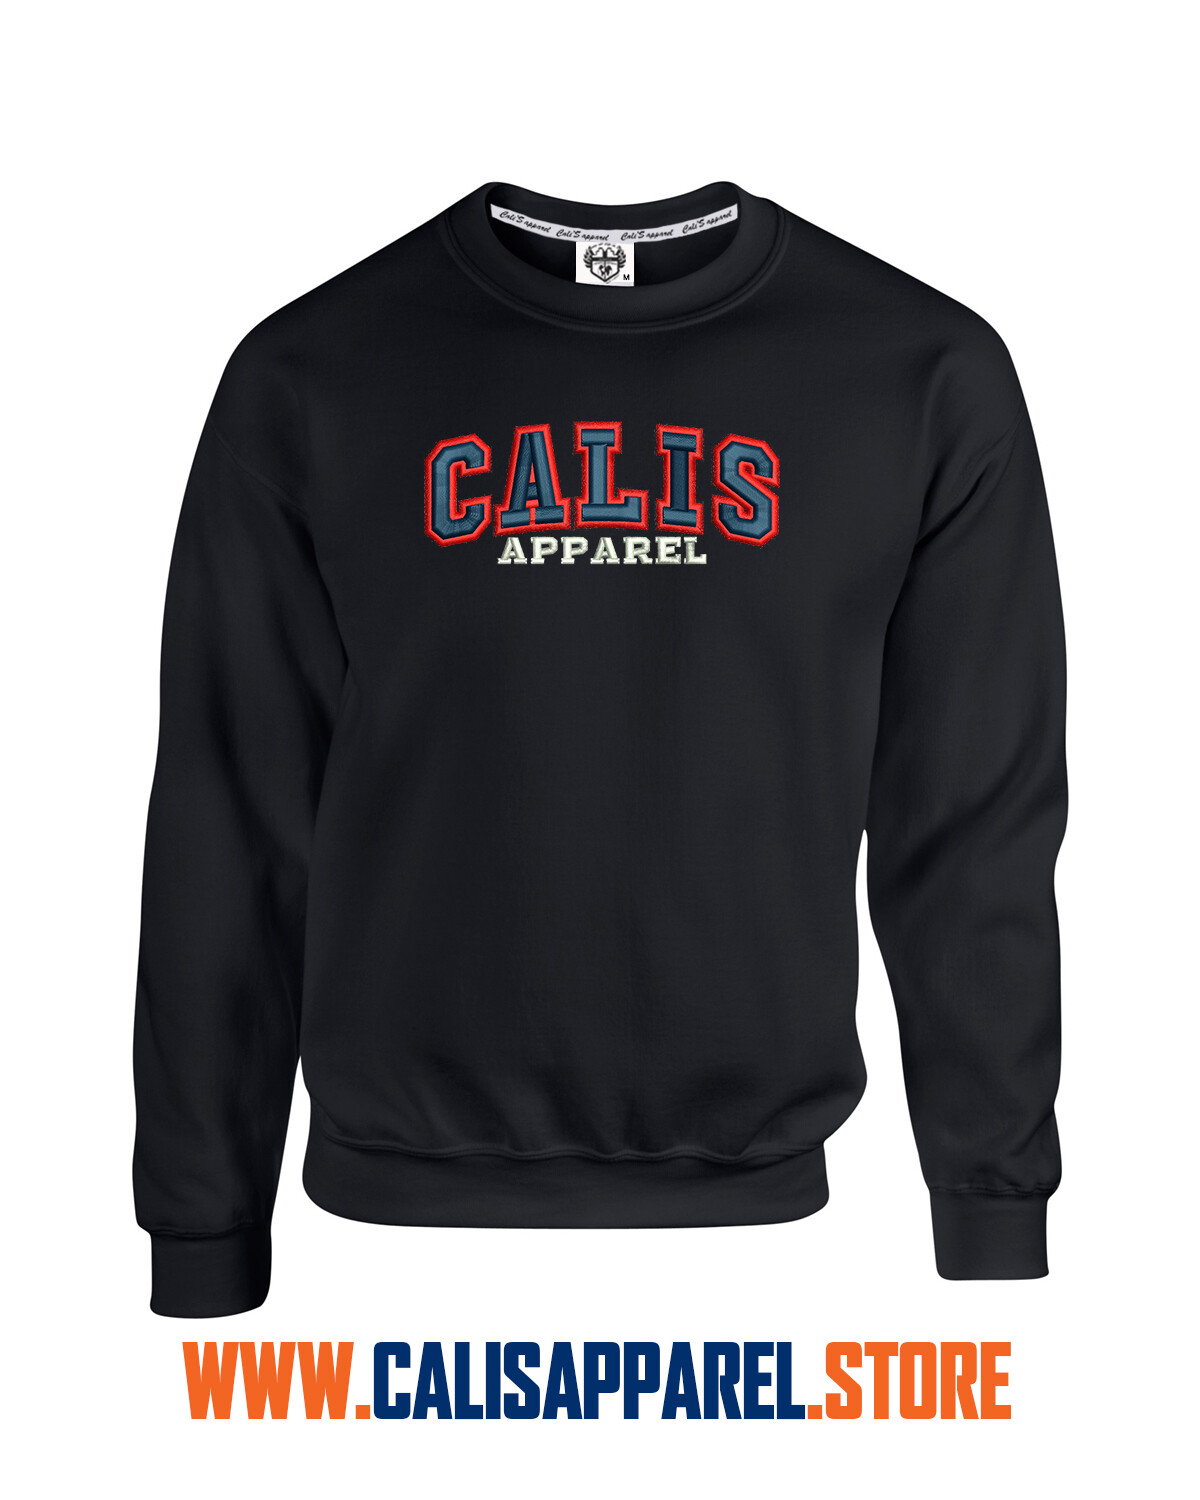 Cali's apparel Black/Orange/White Puff Unisex Crewneck Sweatshirt